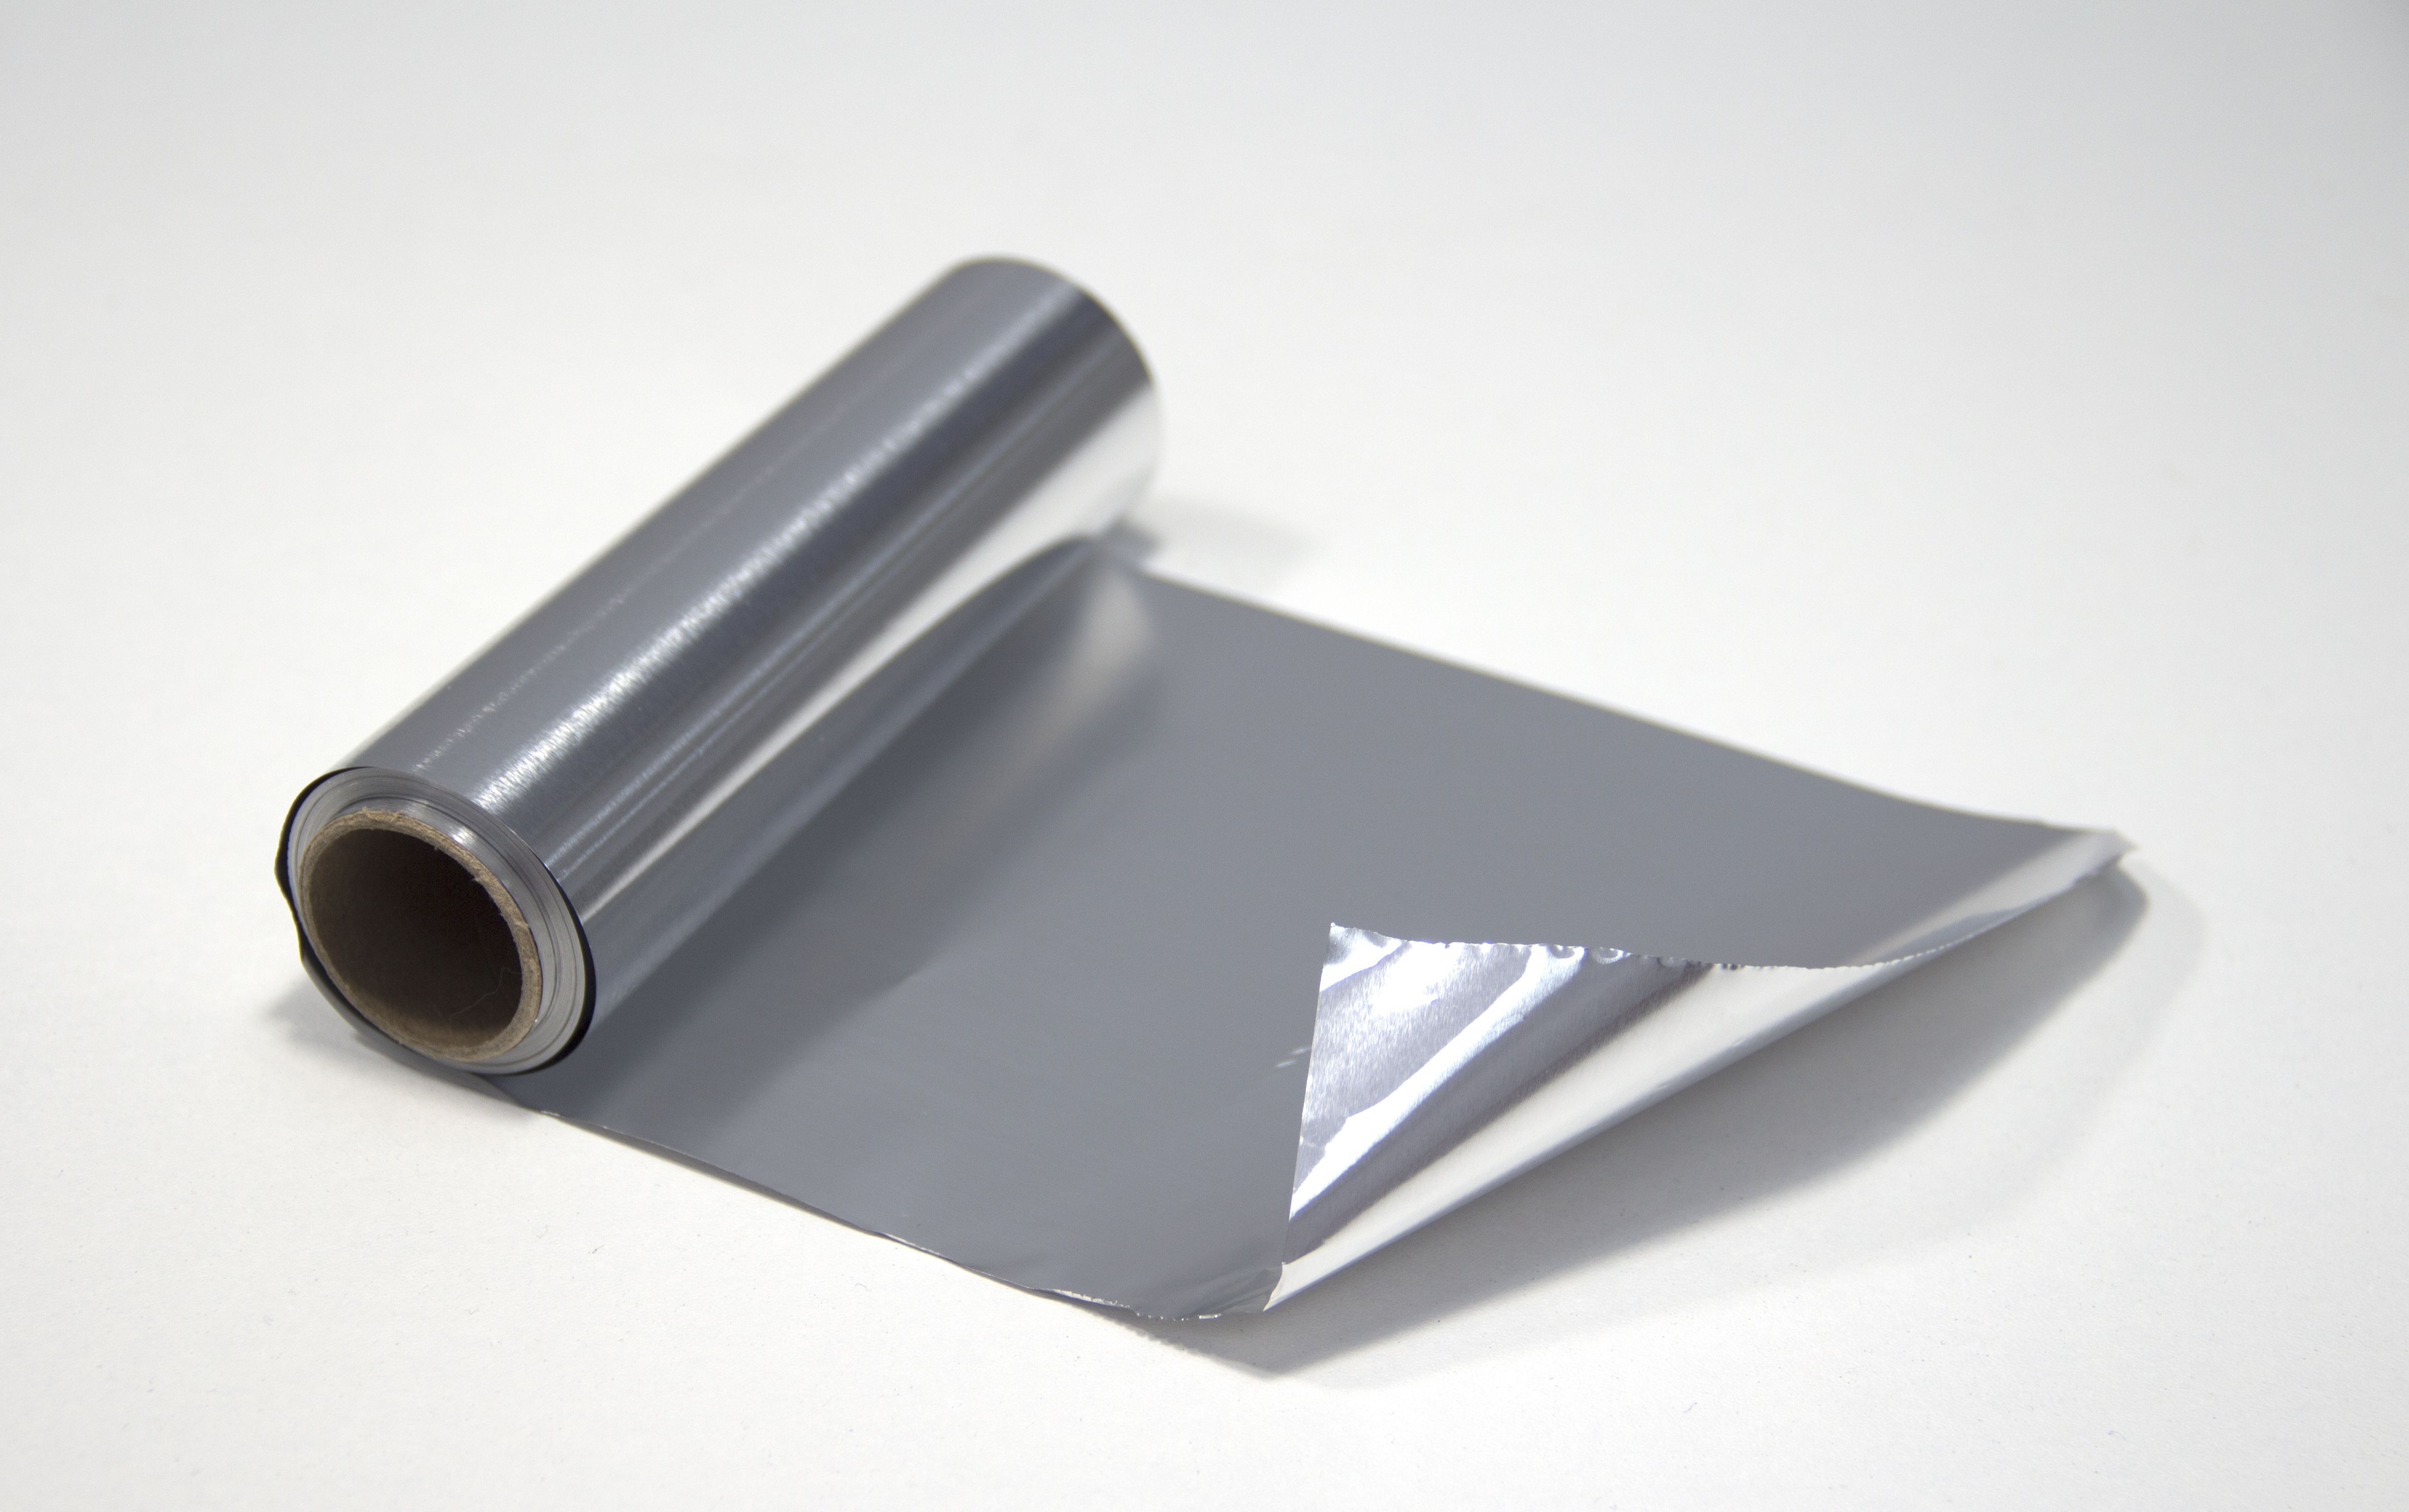 Sabes usar correctamente el papel de aluminio? Seguro que no